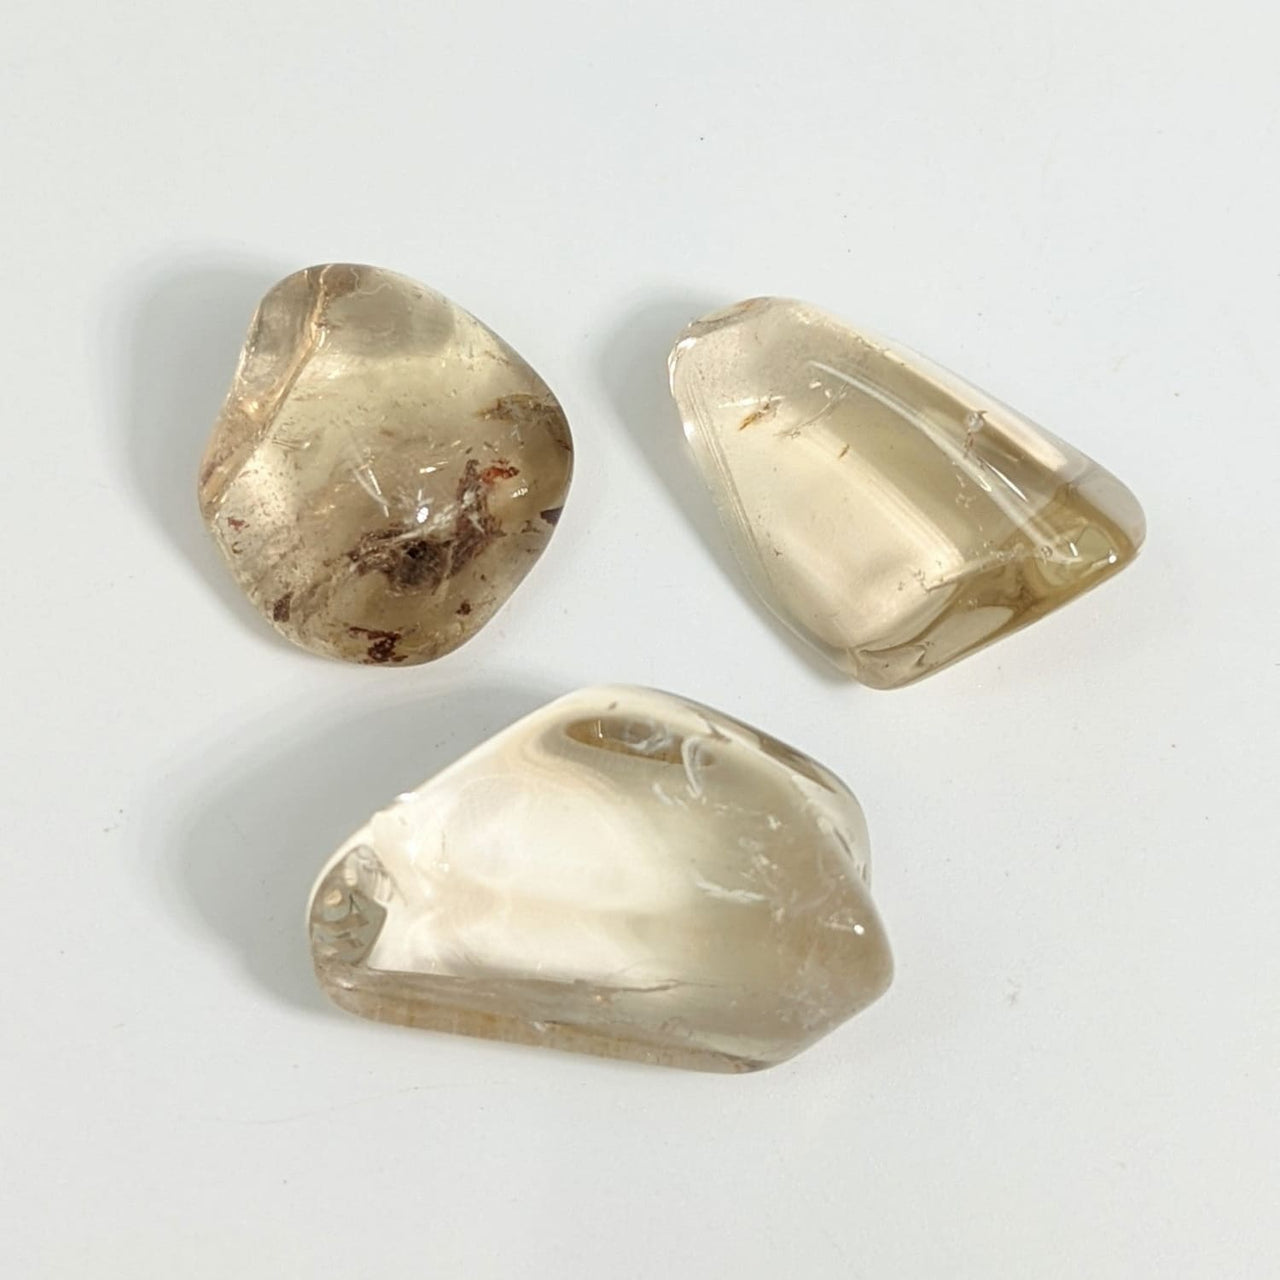 3 Natural Citrine Tumble Stones - 3 pack parcel #SK7884 - 